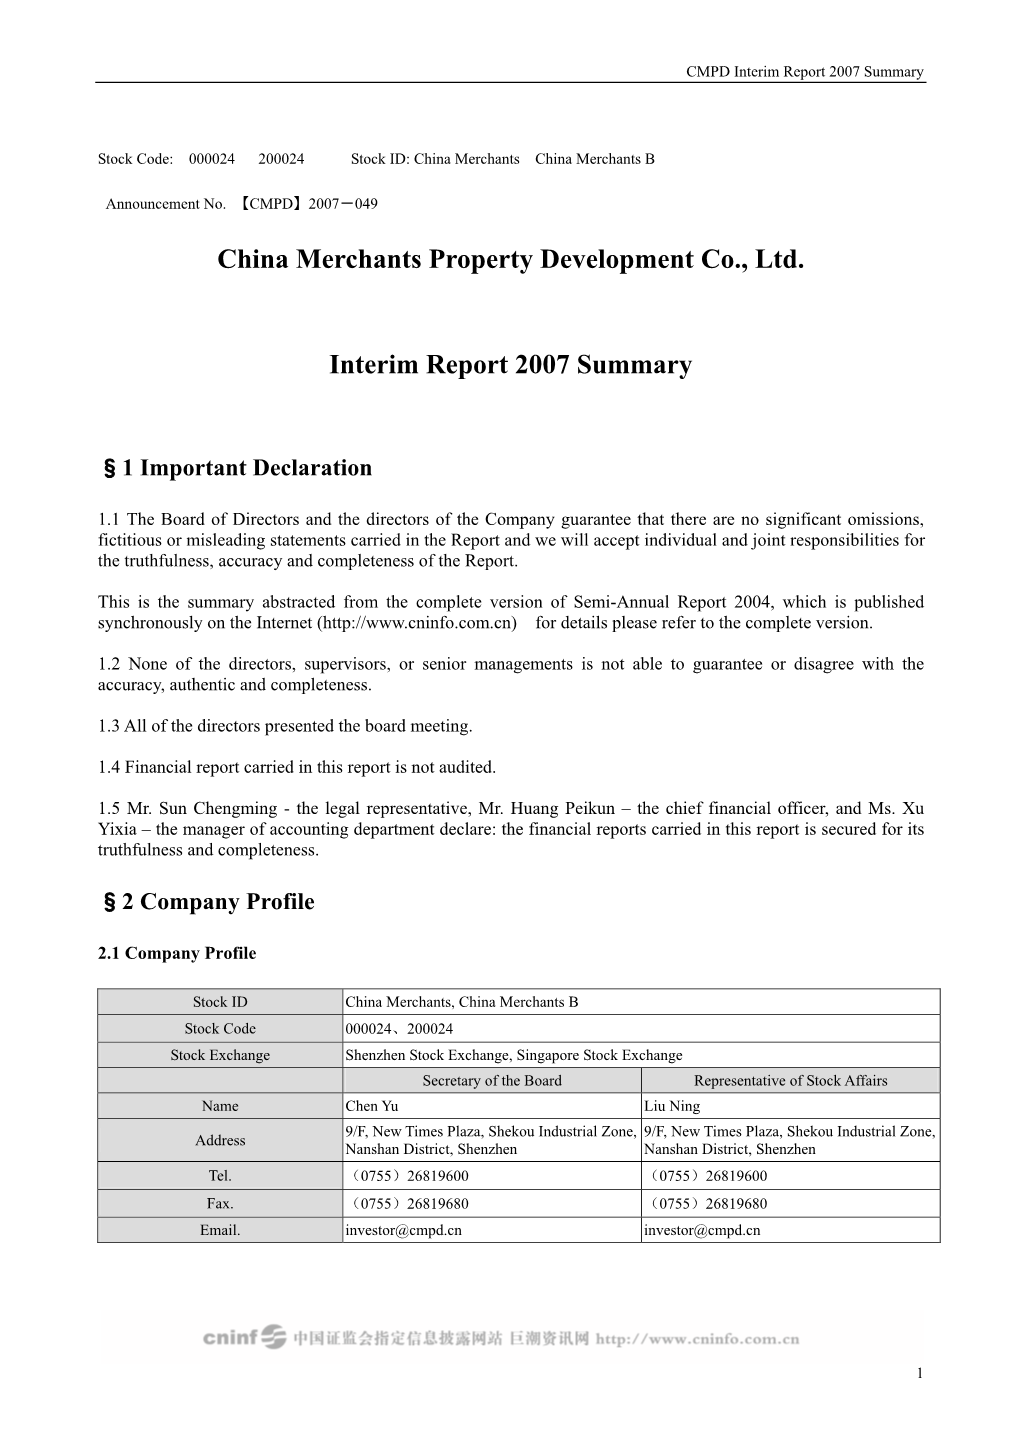 China Merchants Property Development Co., Ltd. Interim Report